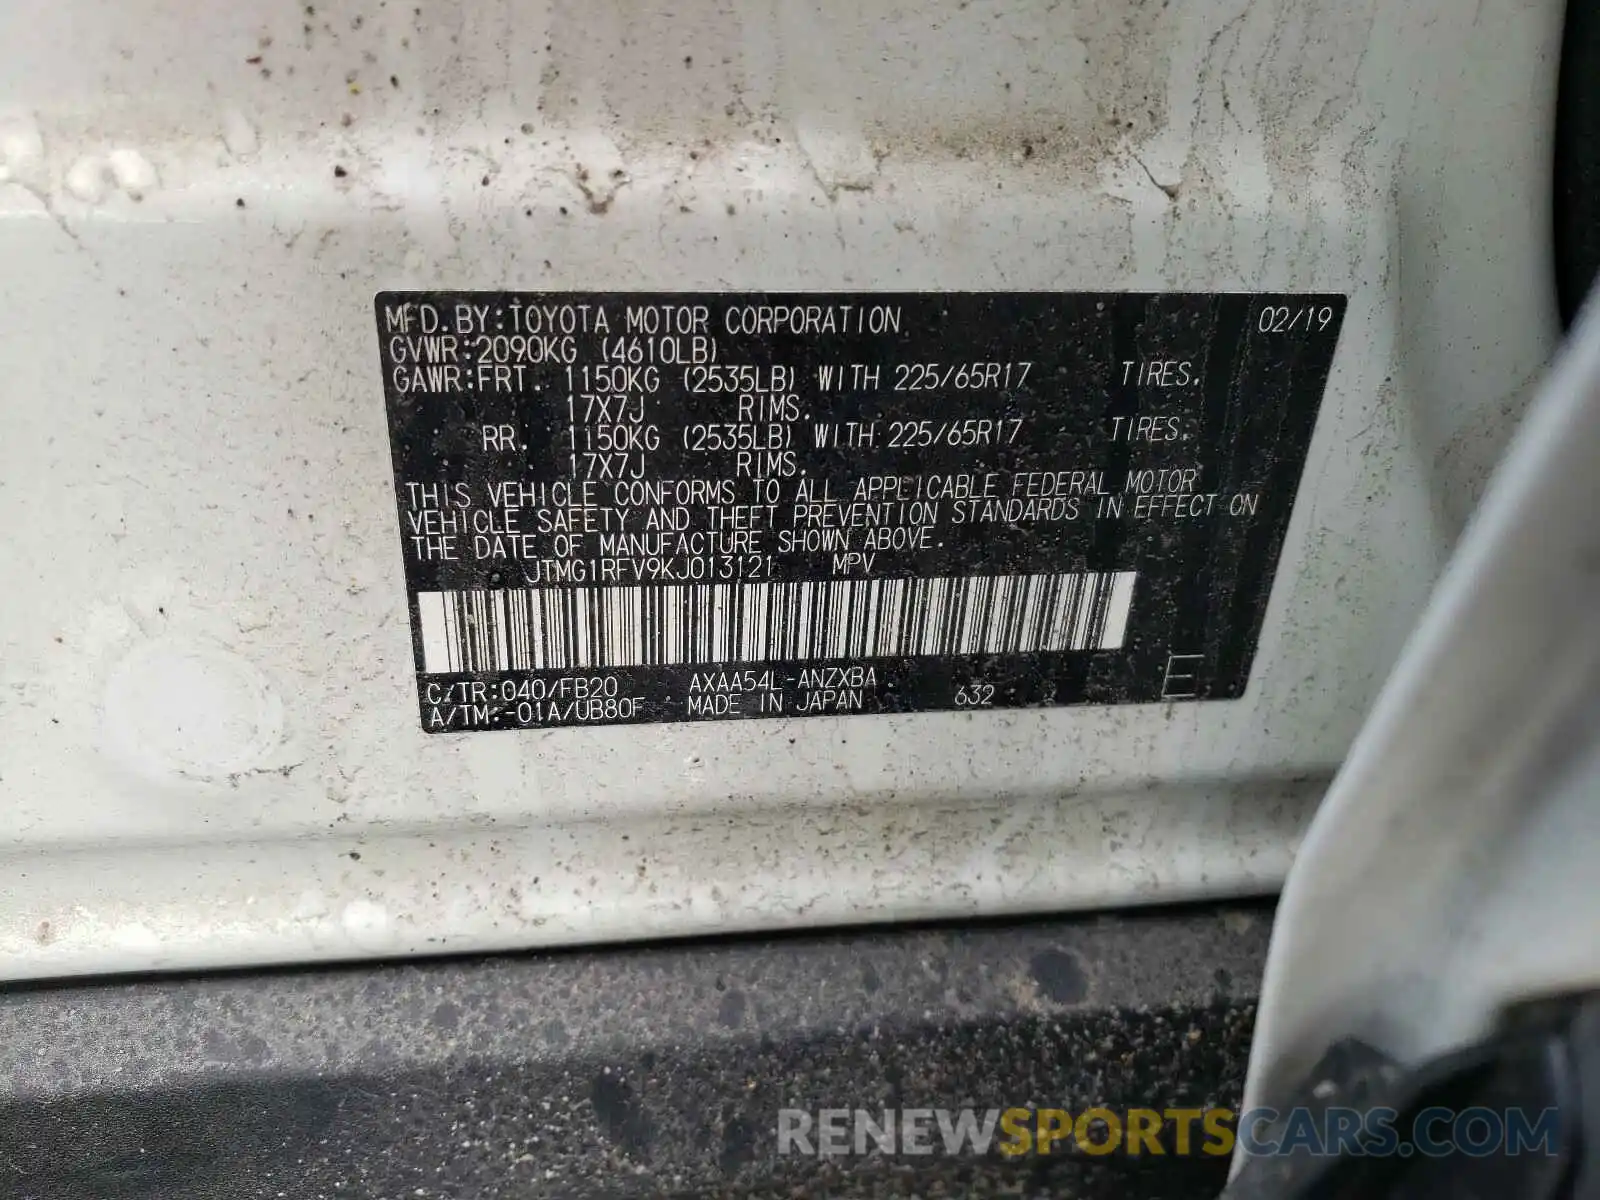 10 Photograph of a damaged car JTMG1RFV9KJ013121 TOYOTA RAV4 2019